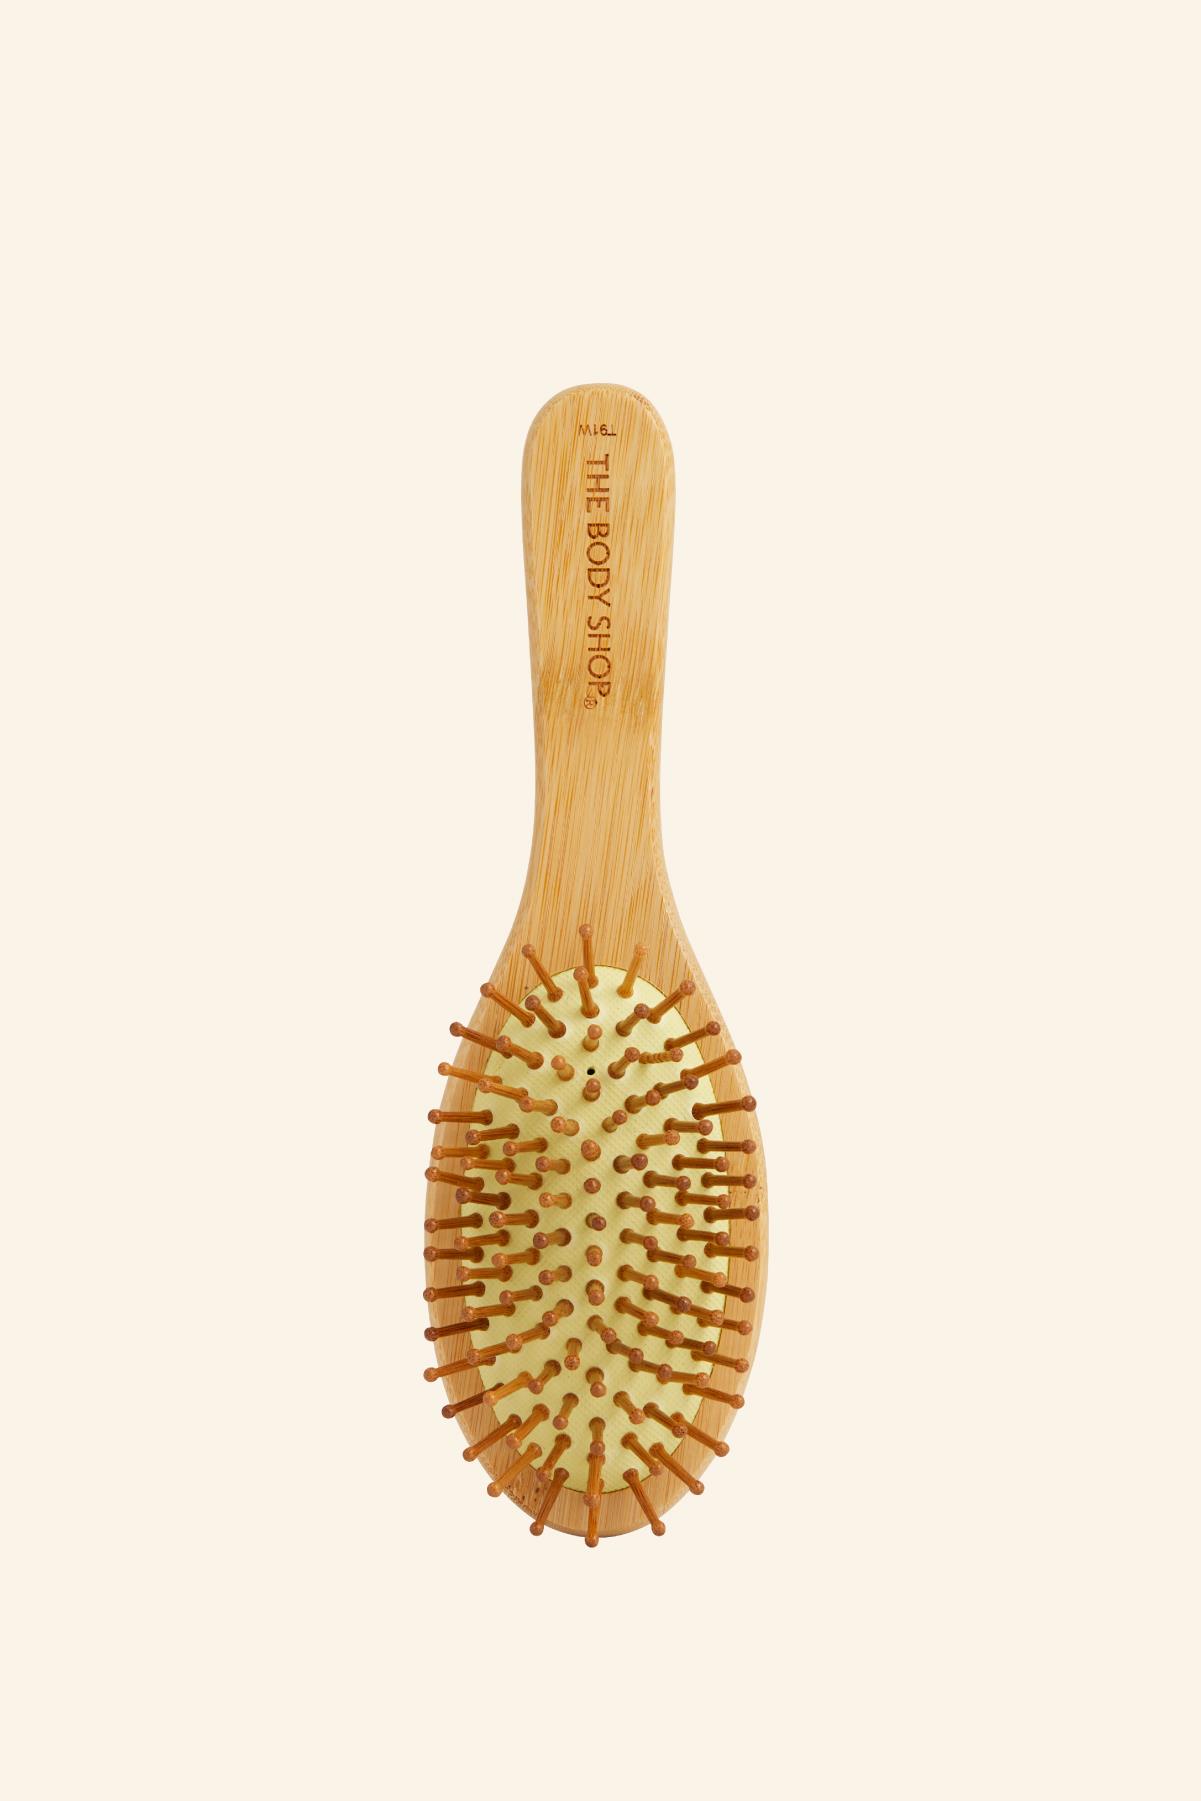 Bambu Dişli Saç Fırçası (Oval) | The Body Shop